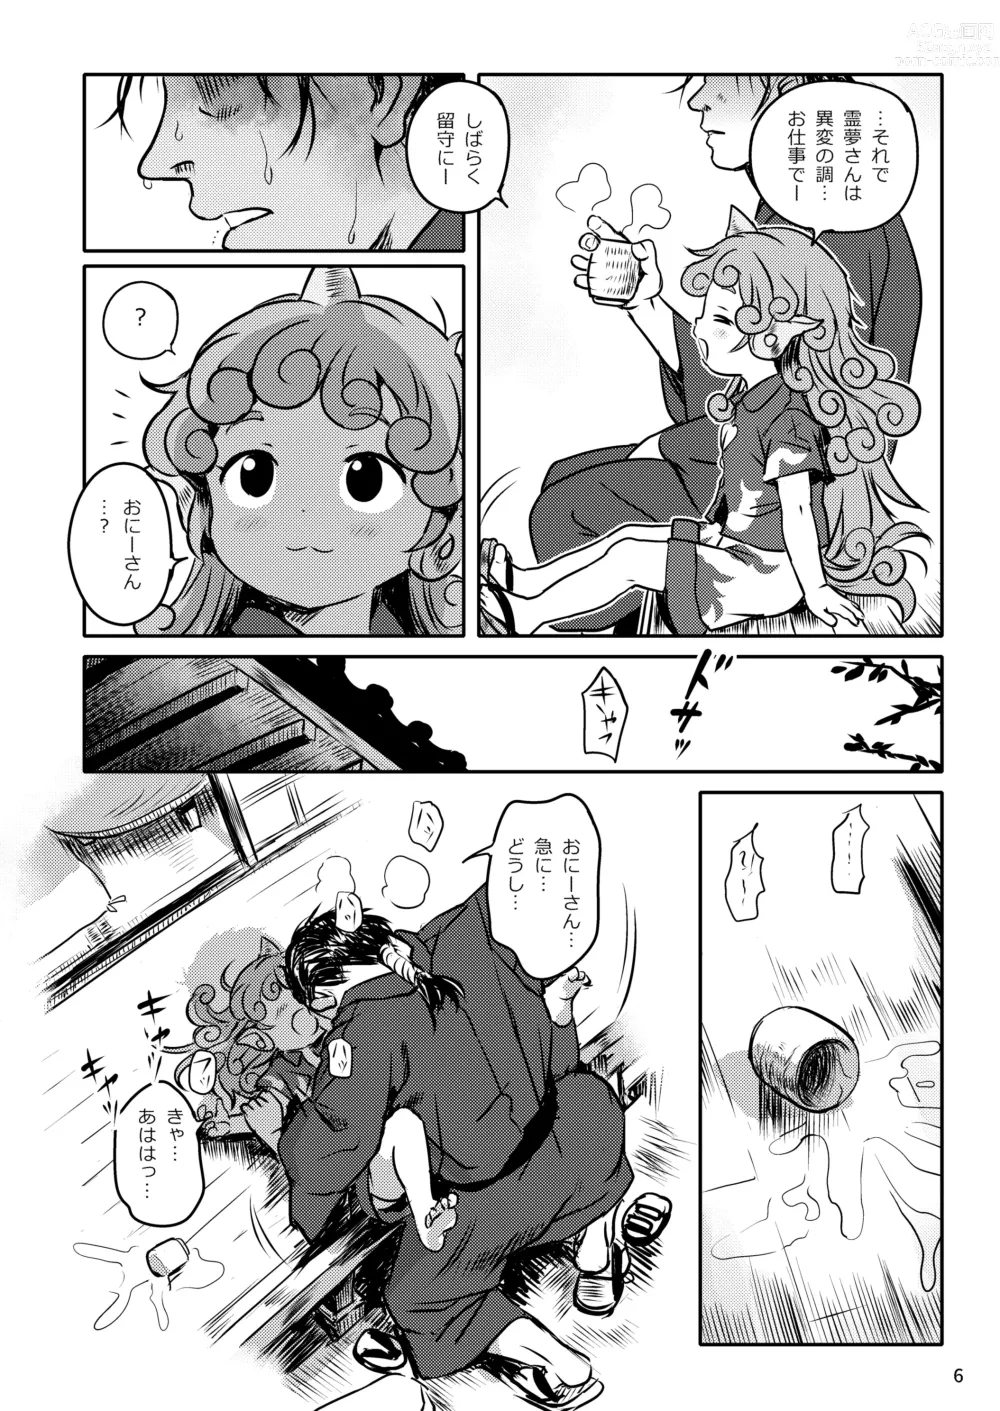 Page 6 of doujinshi Haratte! Aun-chan!